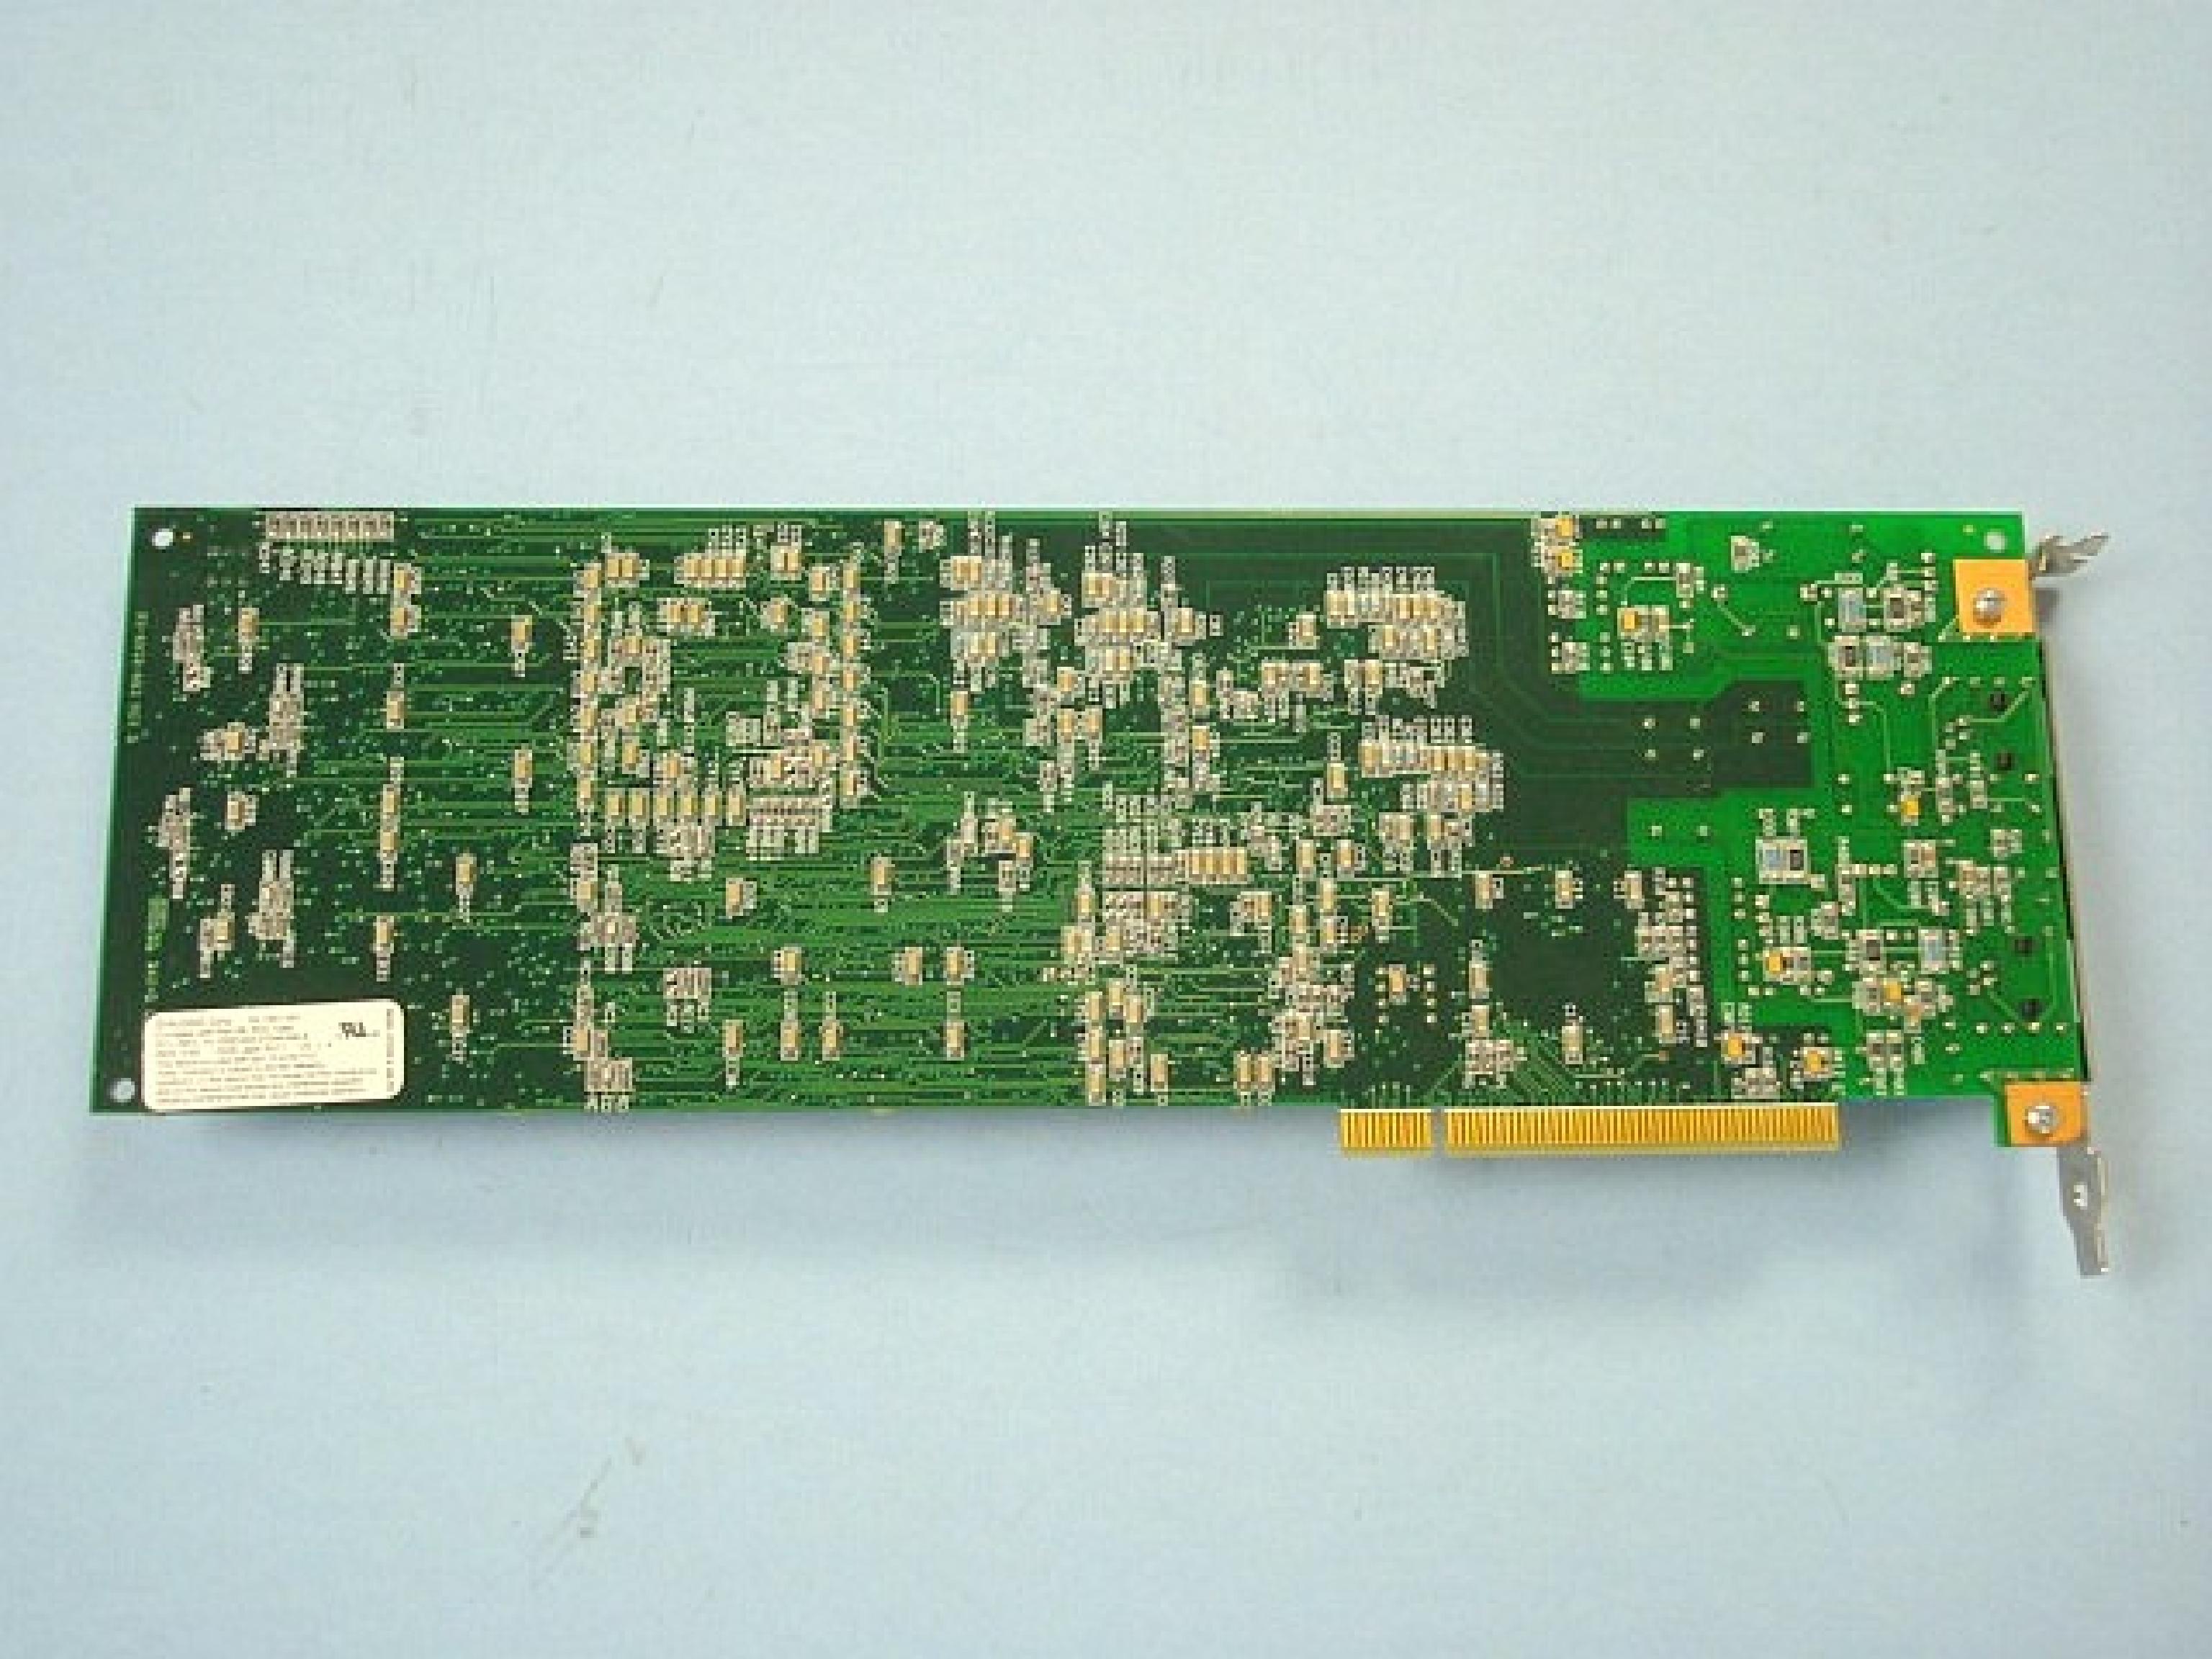 DIALOGIC 94-3226-005 OPEN BOX GAMMALINK FAX PCI CPI/400